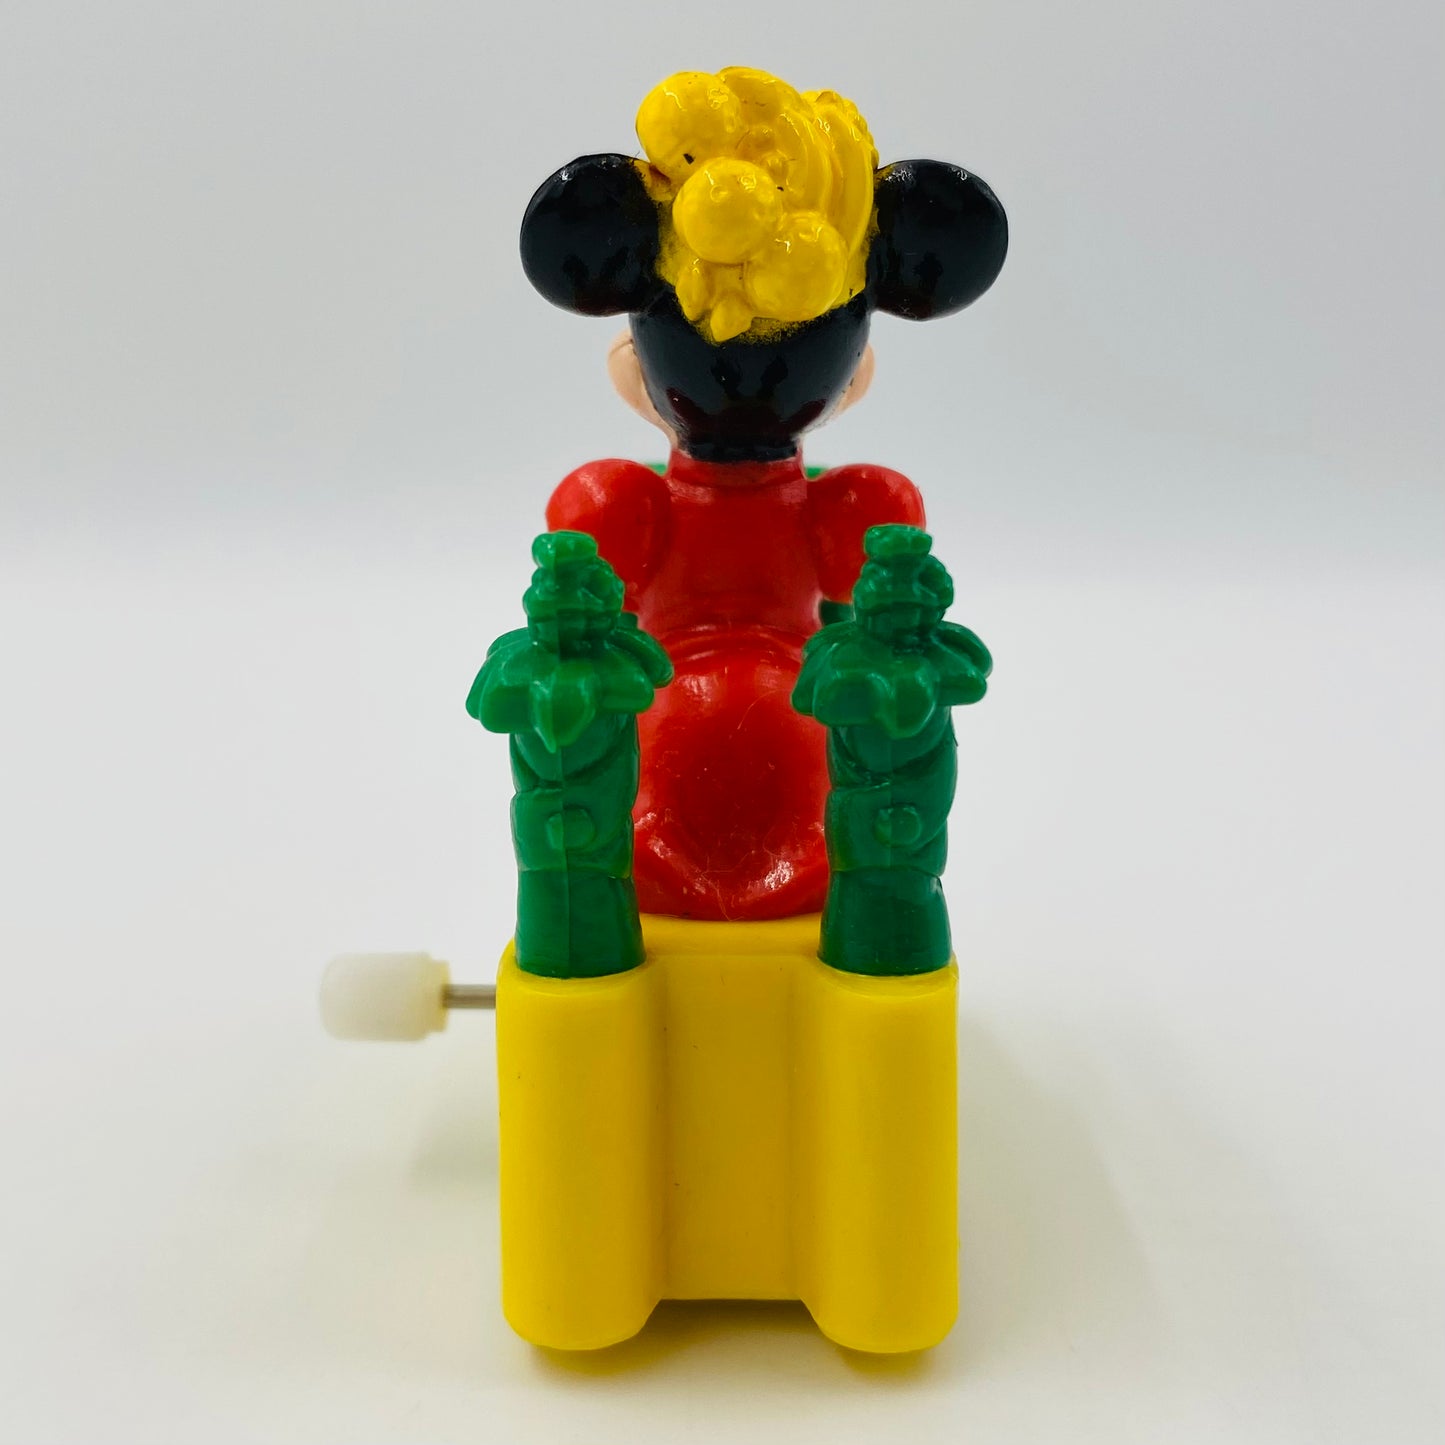 Walt Disney World Surprise Celebration Parade Minnie Mouse Burger King Kids' Meal toy (1991) loose